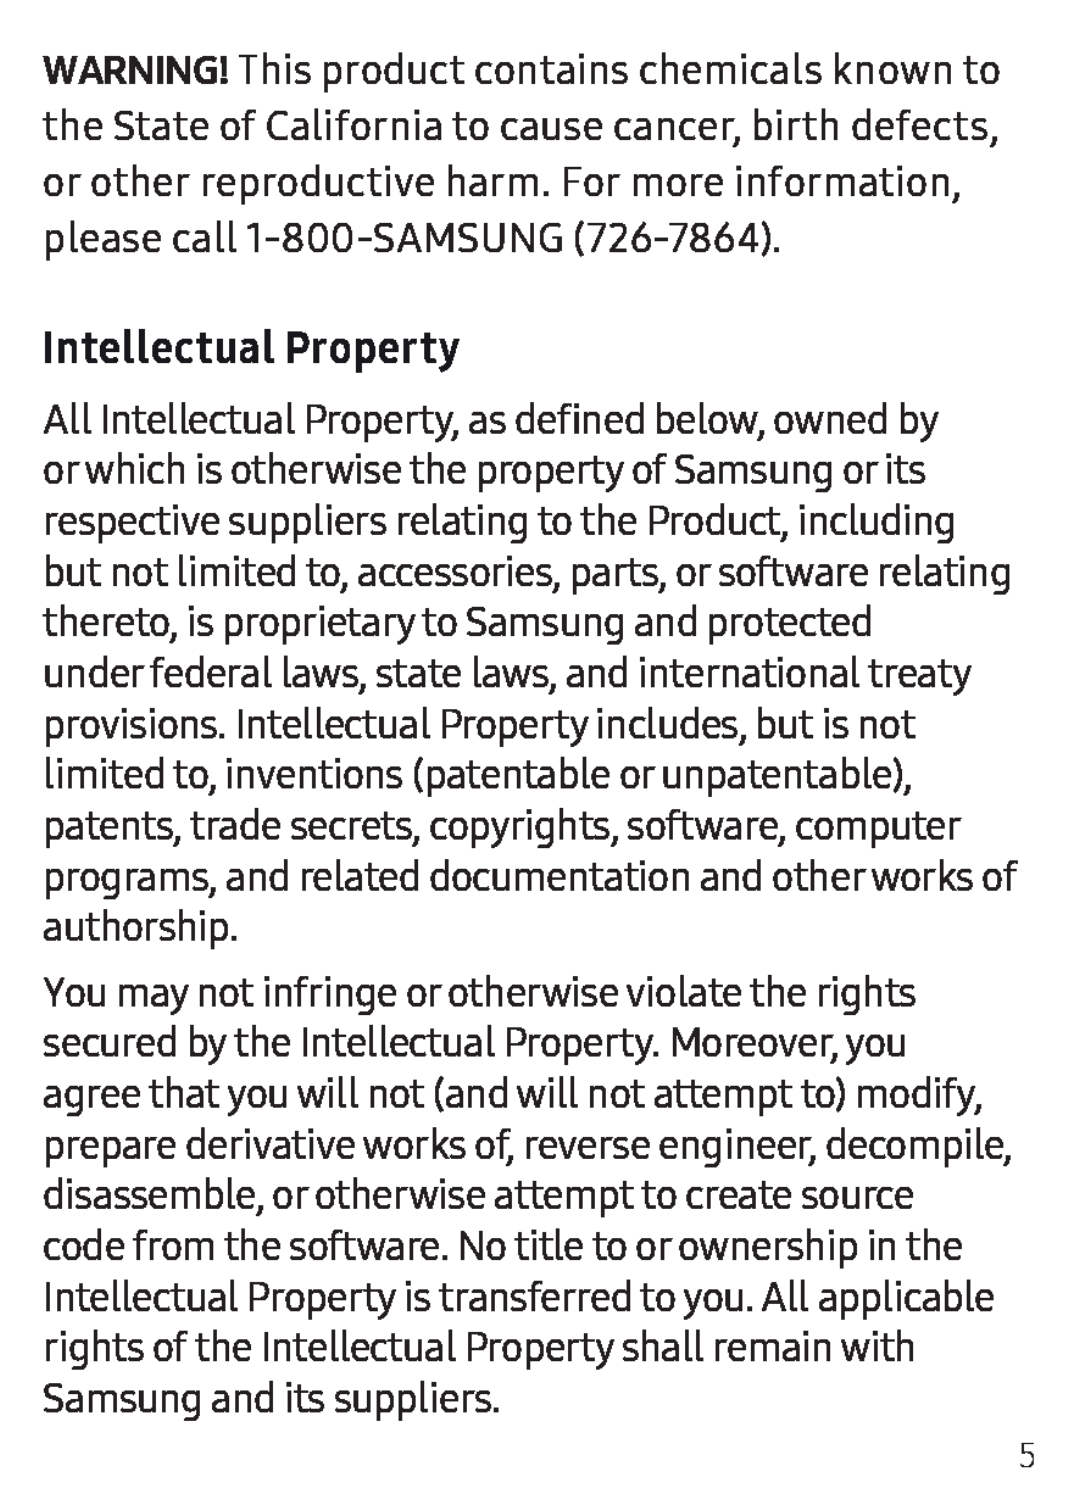 Intellectual Property Galaxy Tab E 8.0 US Cellular